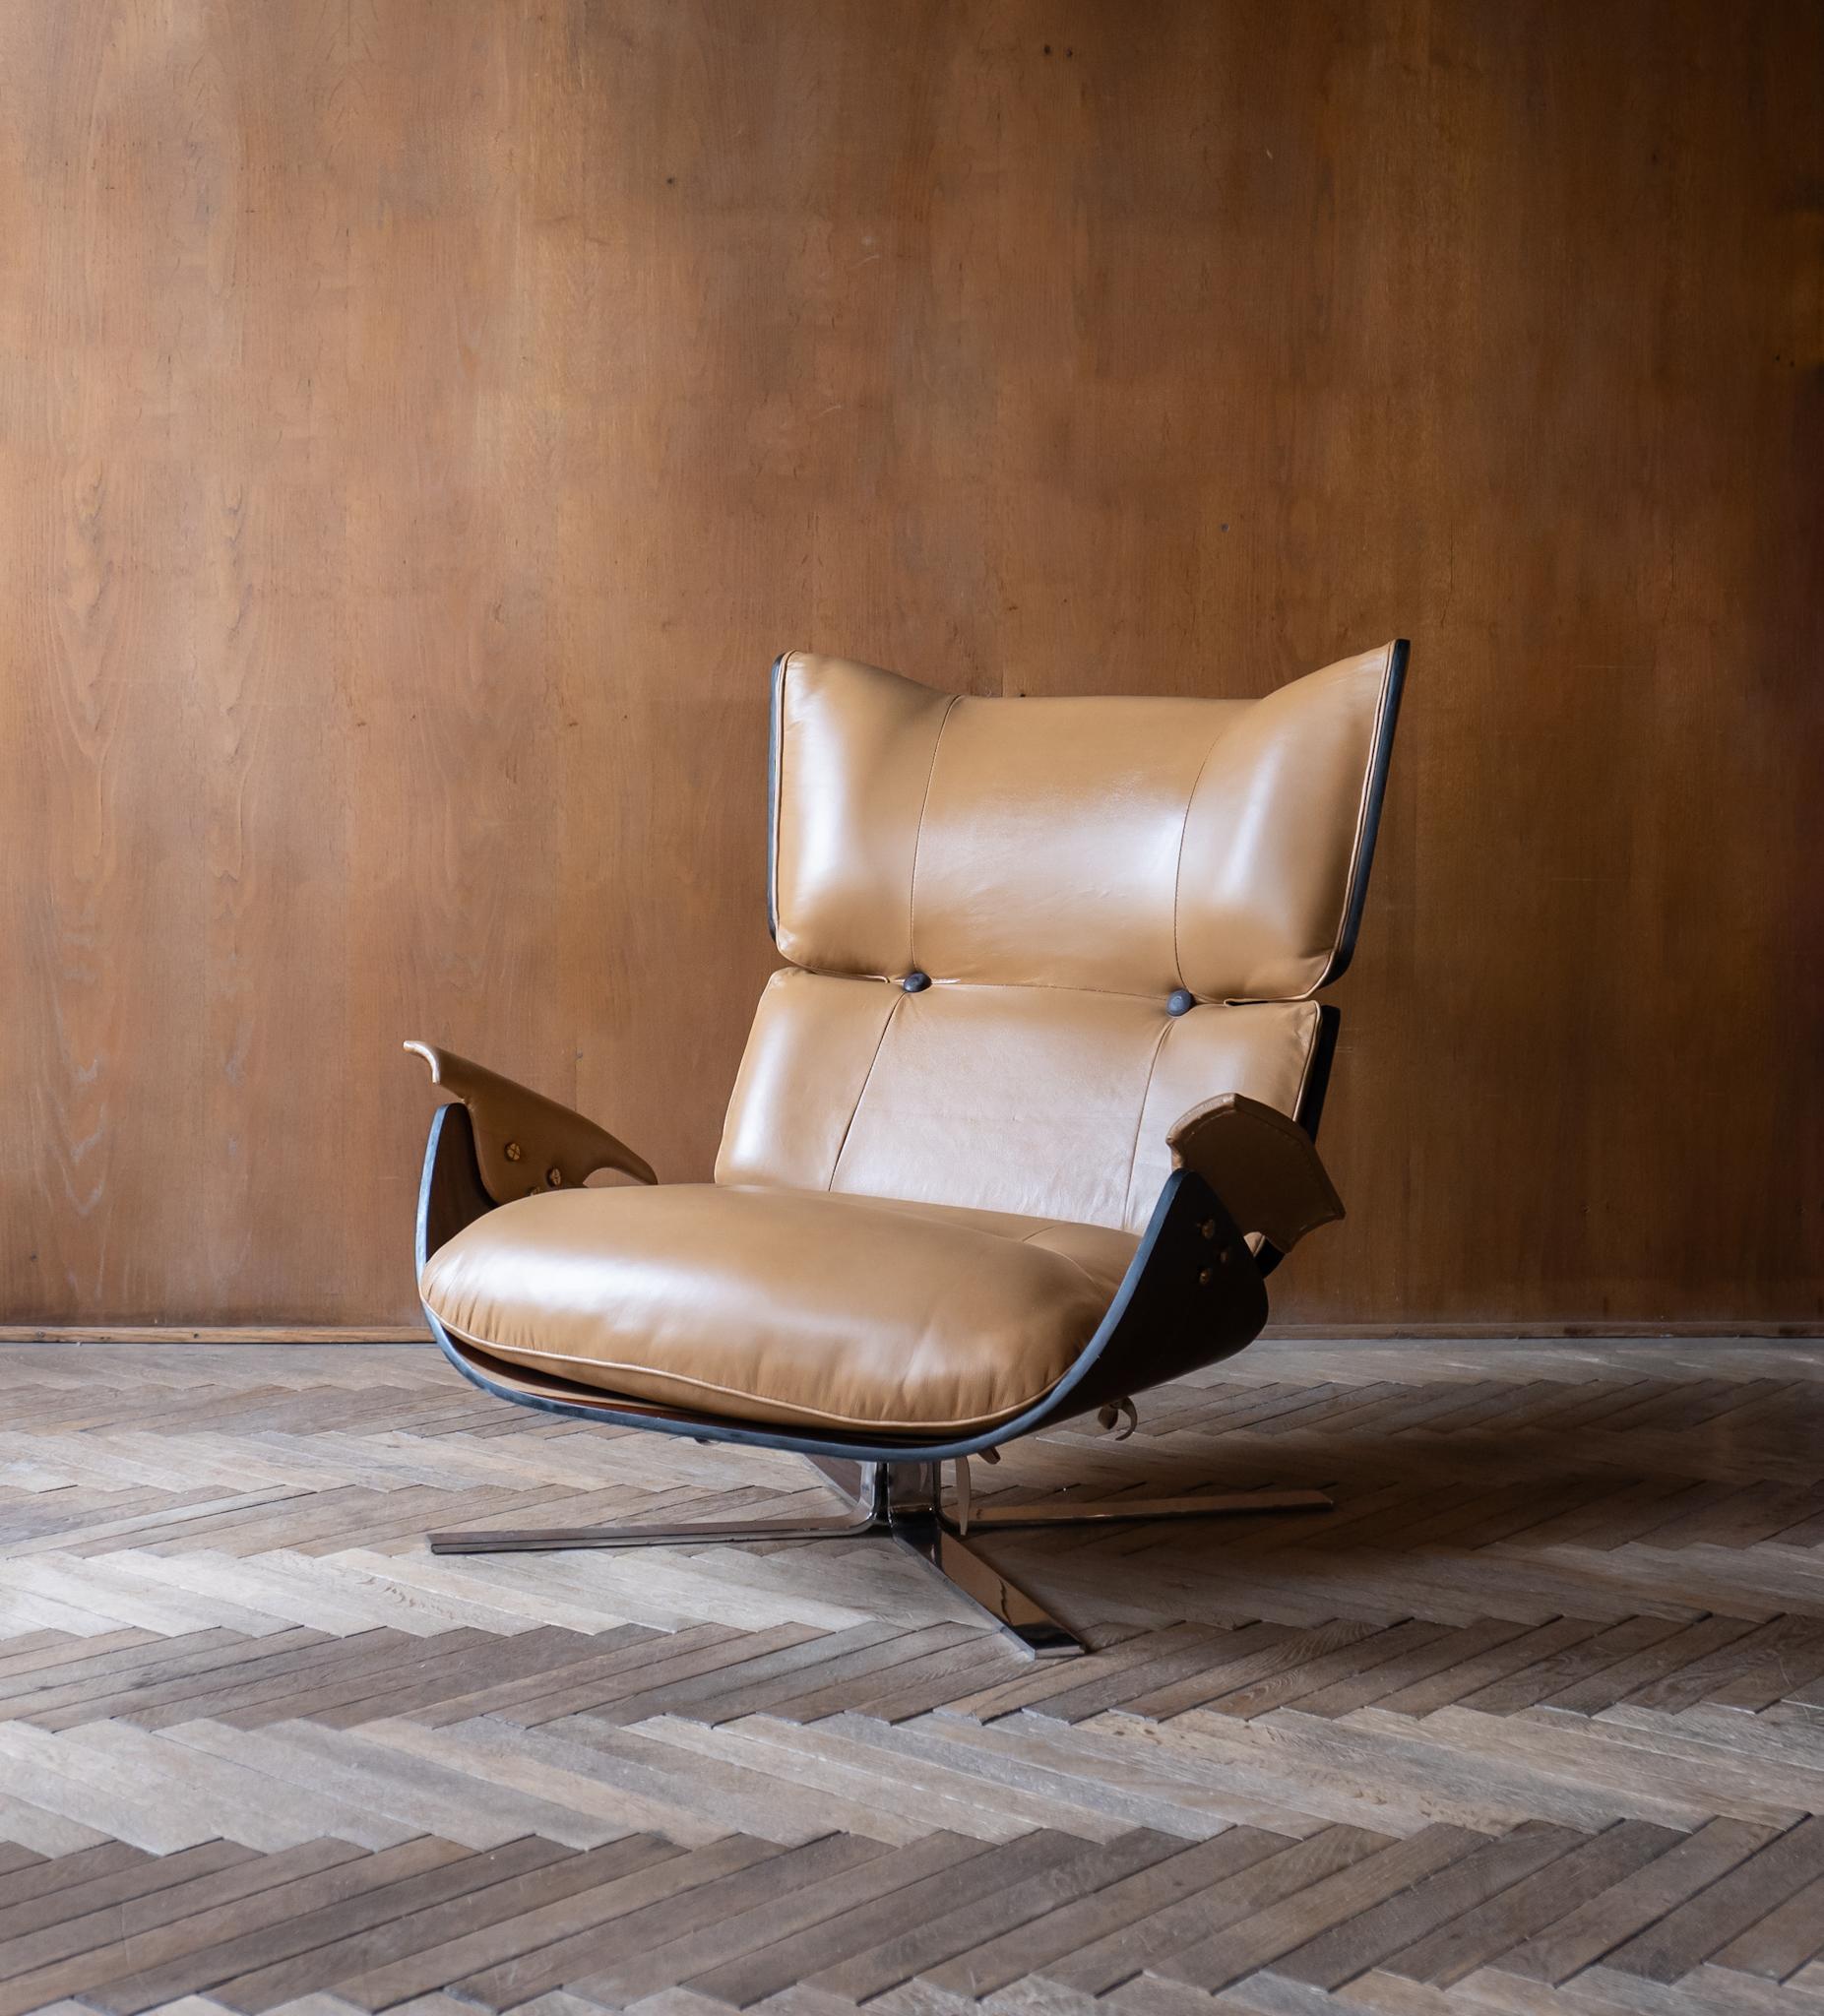 Brazilian Mid-Century Modern Lounge Chair with Ottoman by Jorge Zalszupin, Brazil 1960s